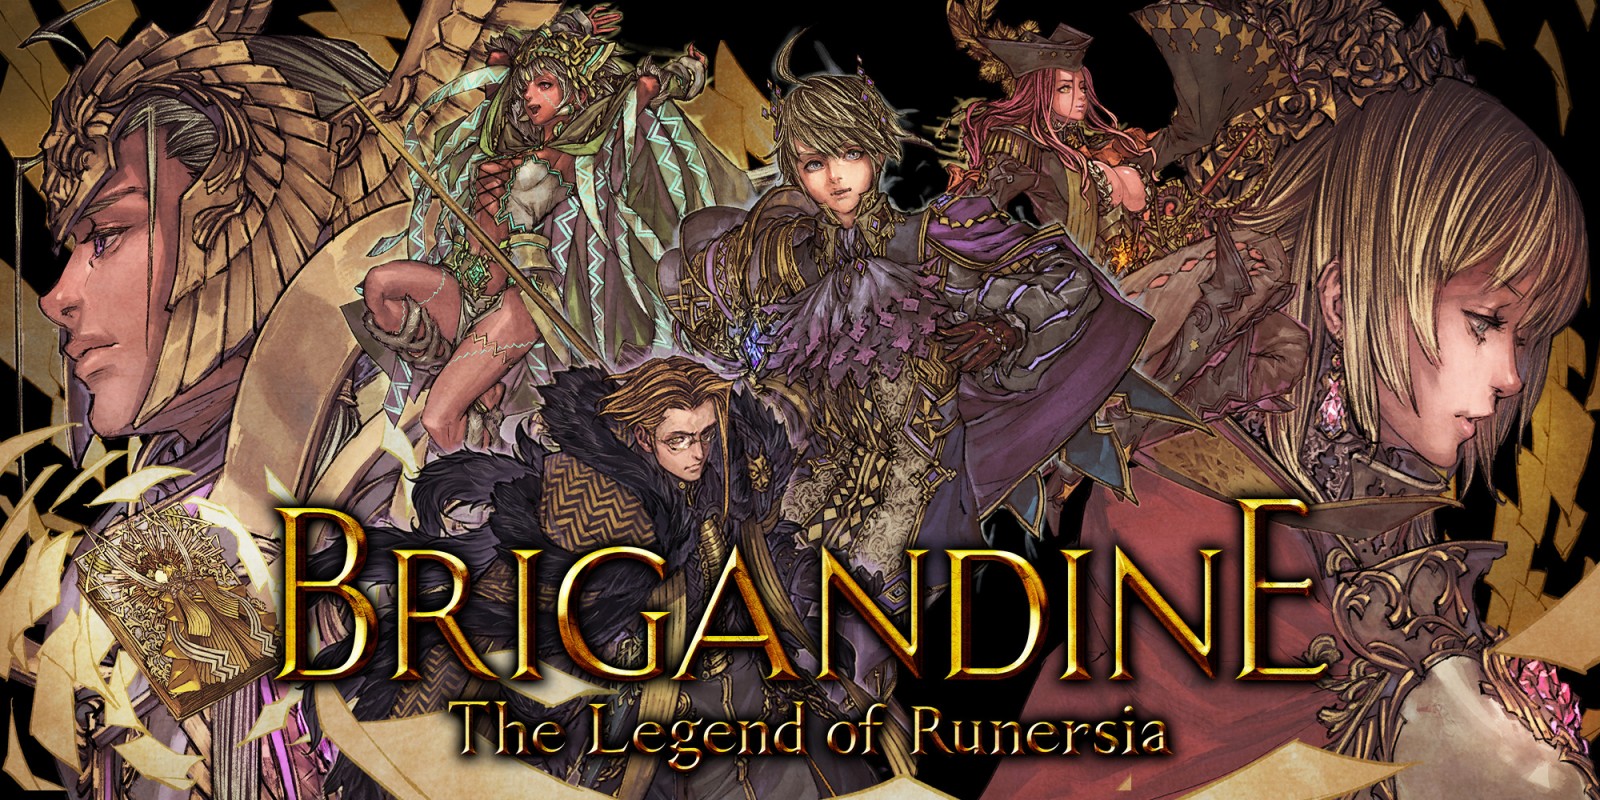 legend of runersia release date